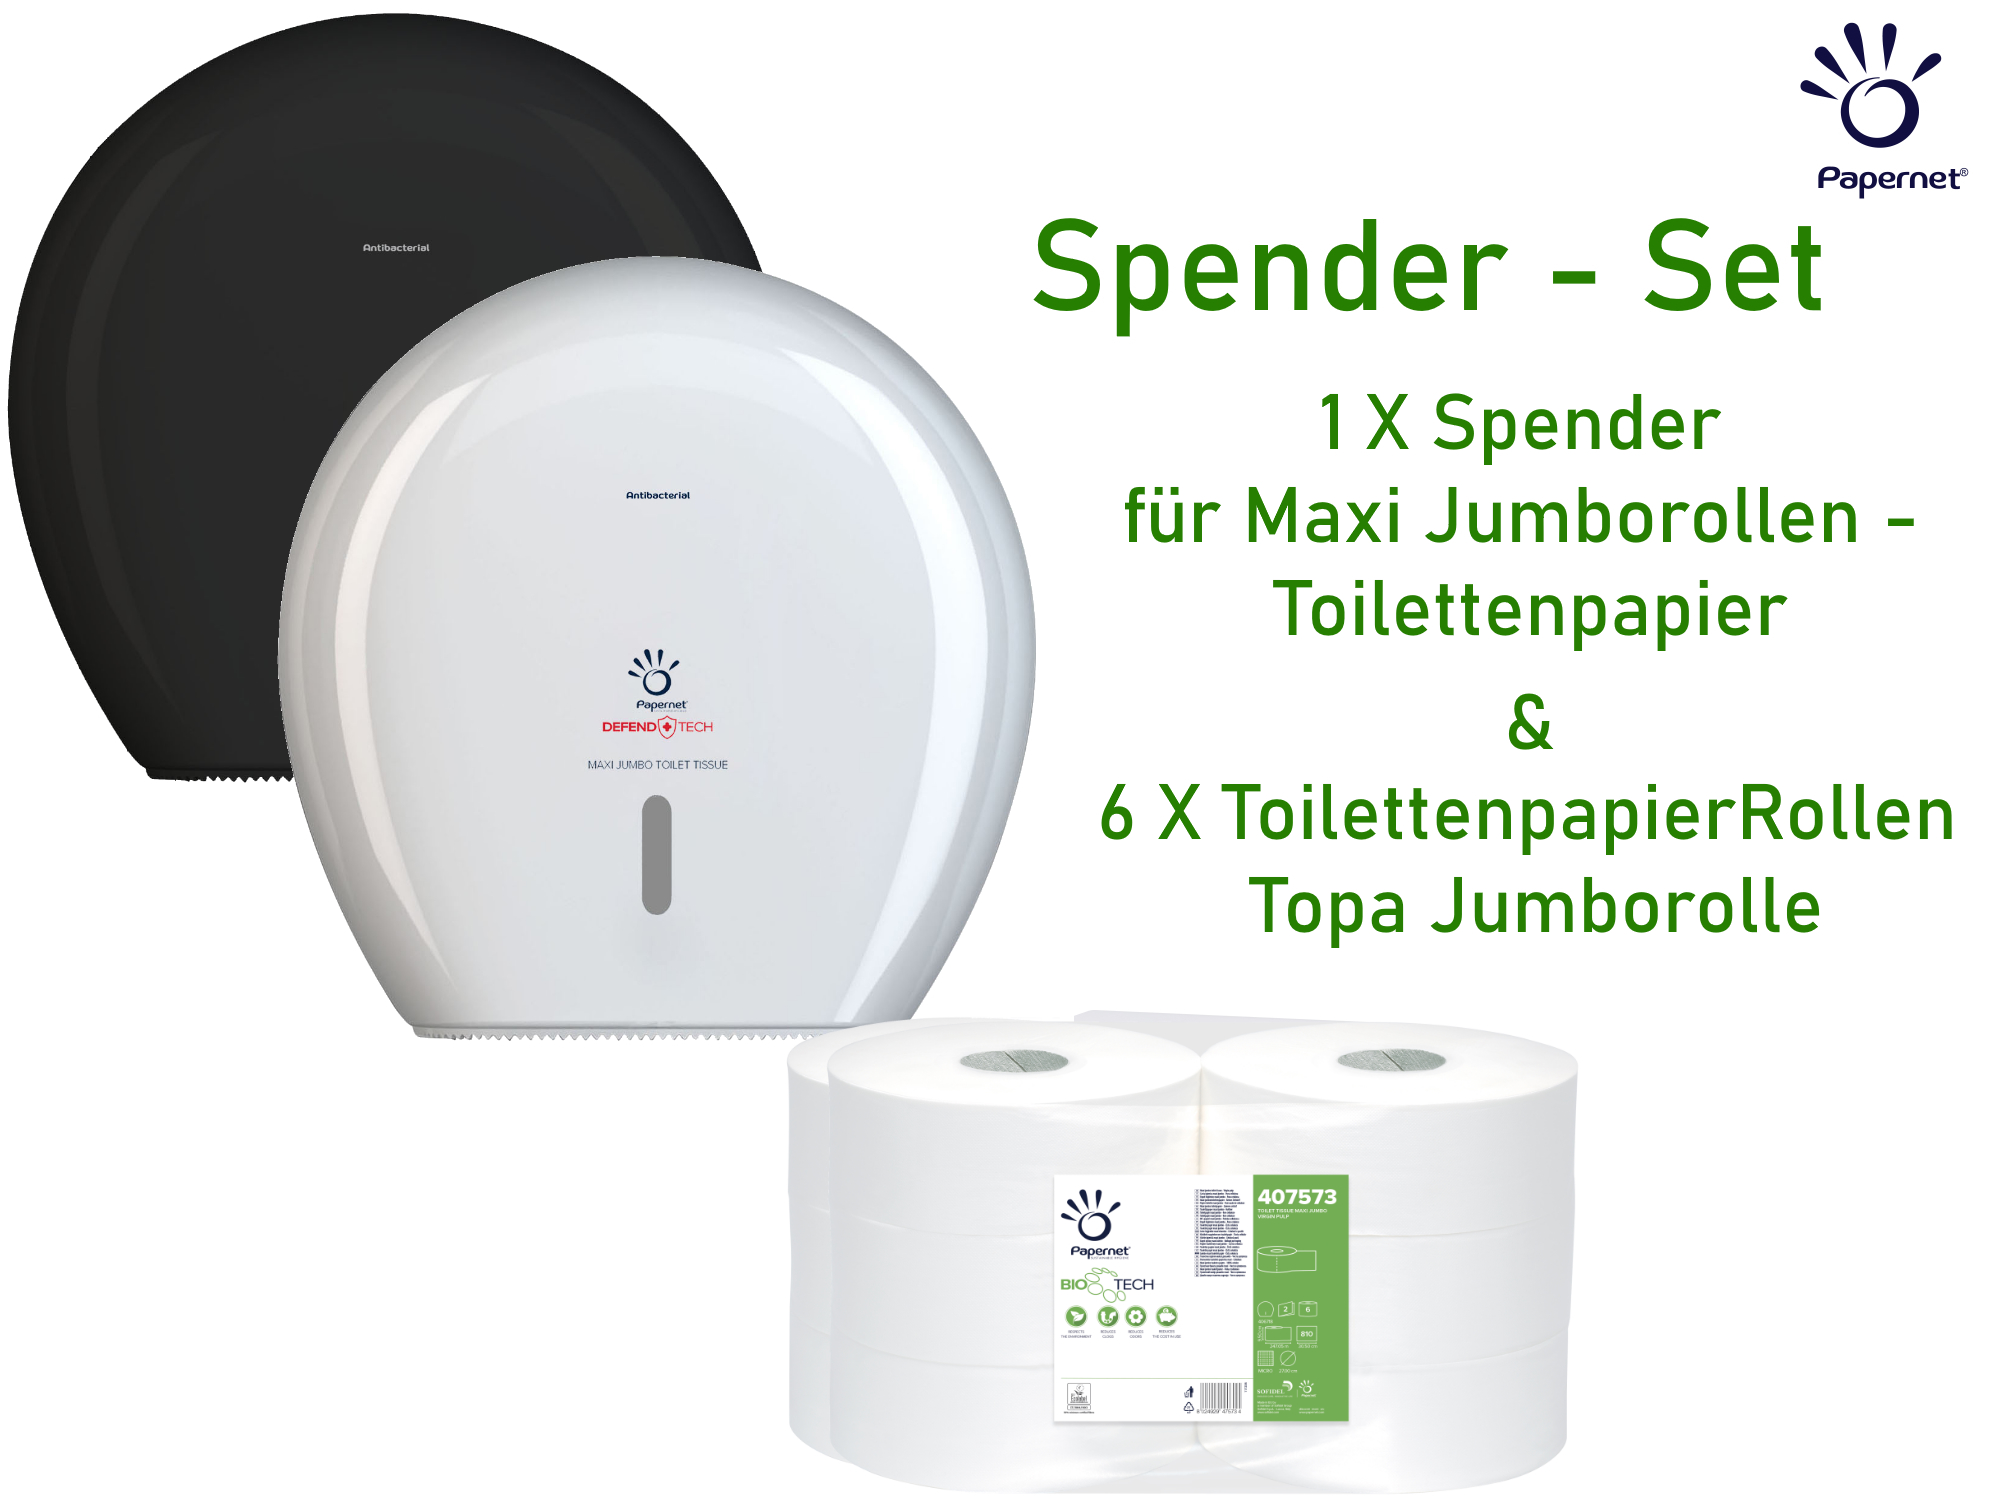 Spender SET: Papernet Toilettenpapier Spender für Maxi Jumborollen - schwarz & Toilettenpapier 